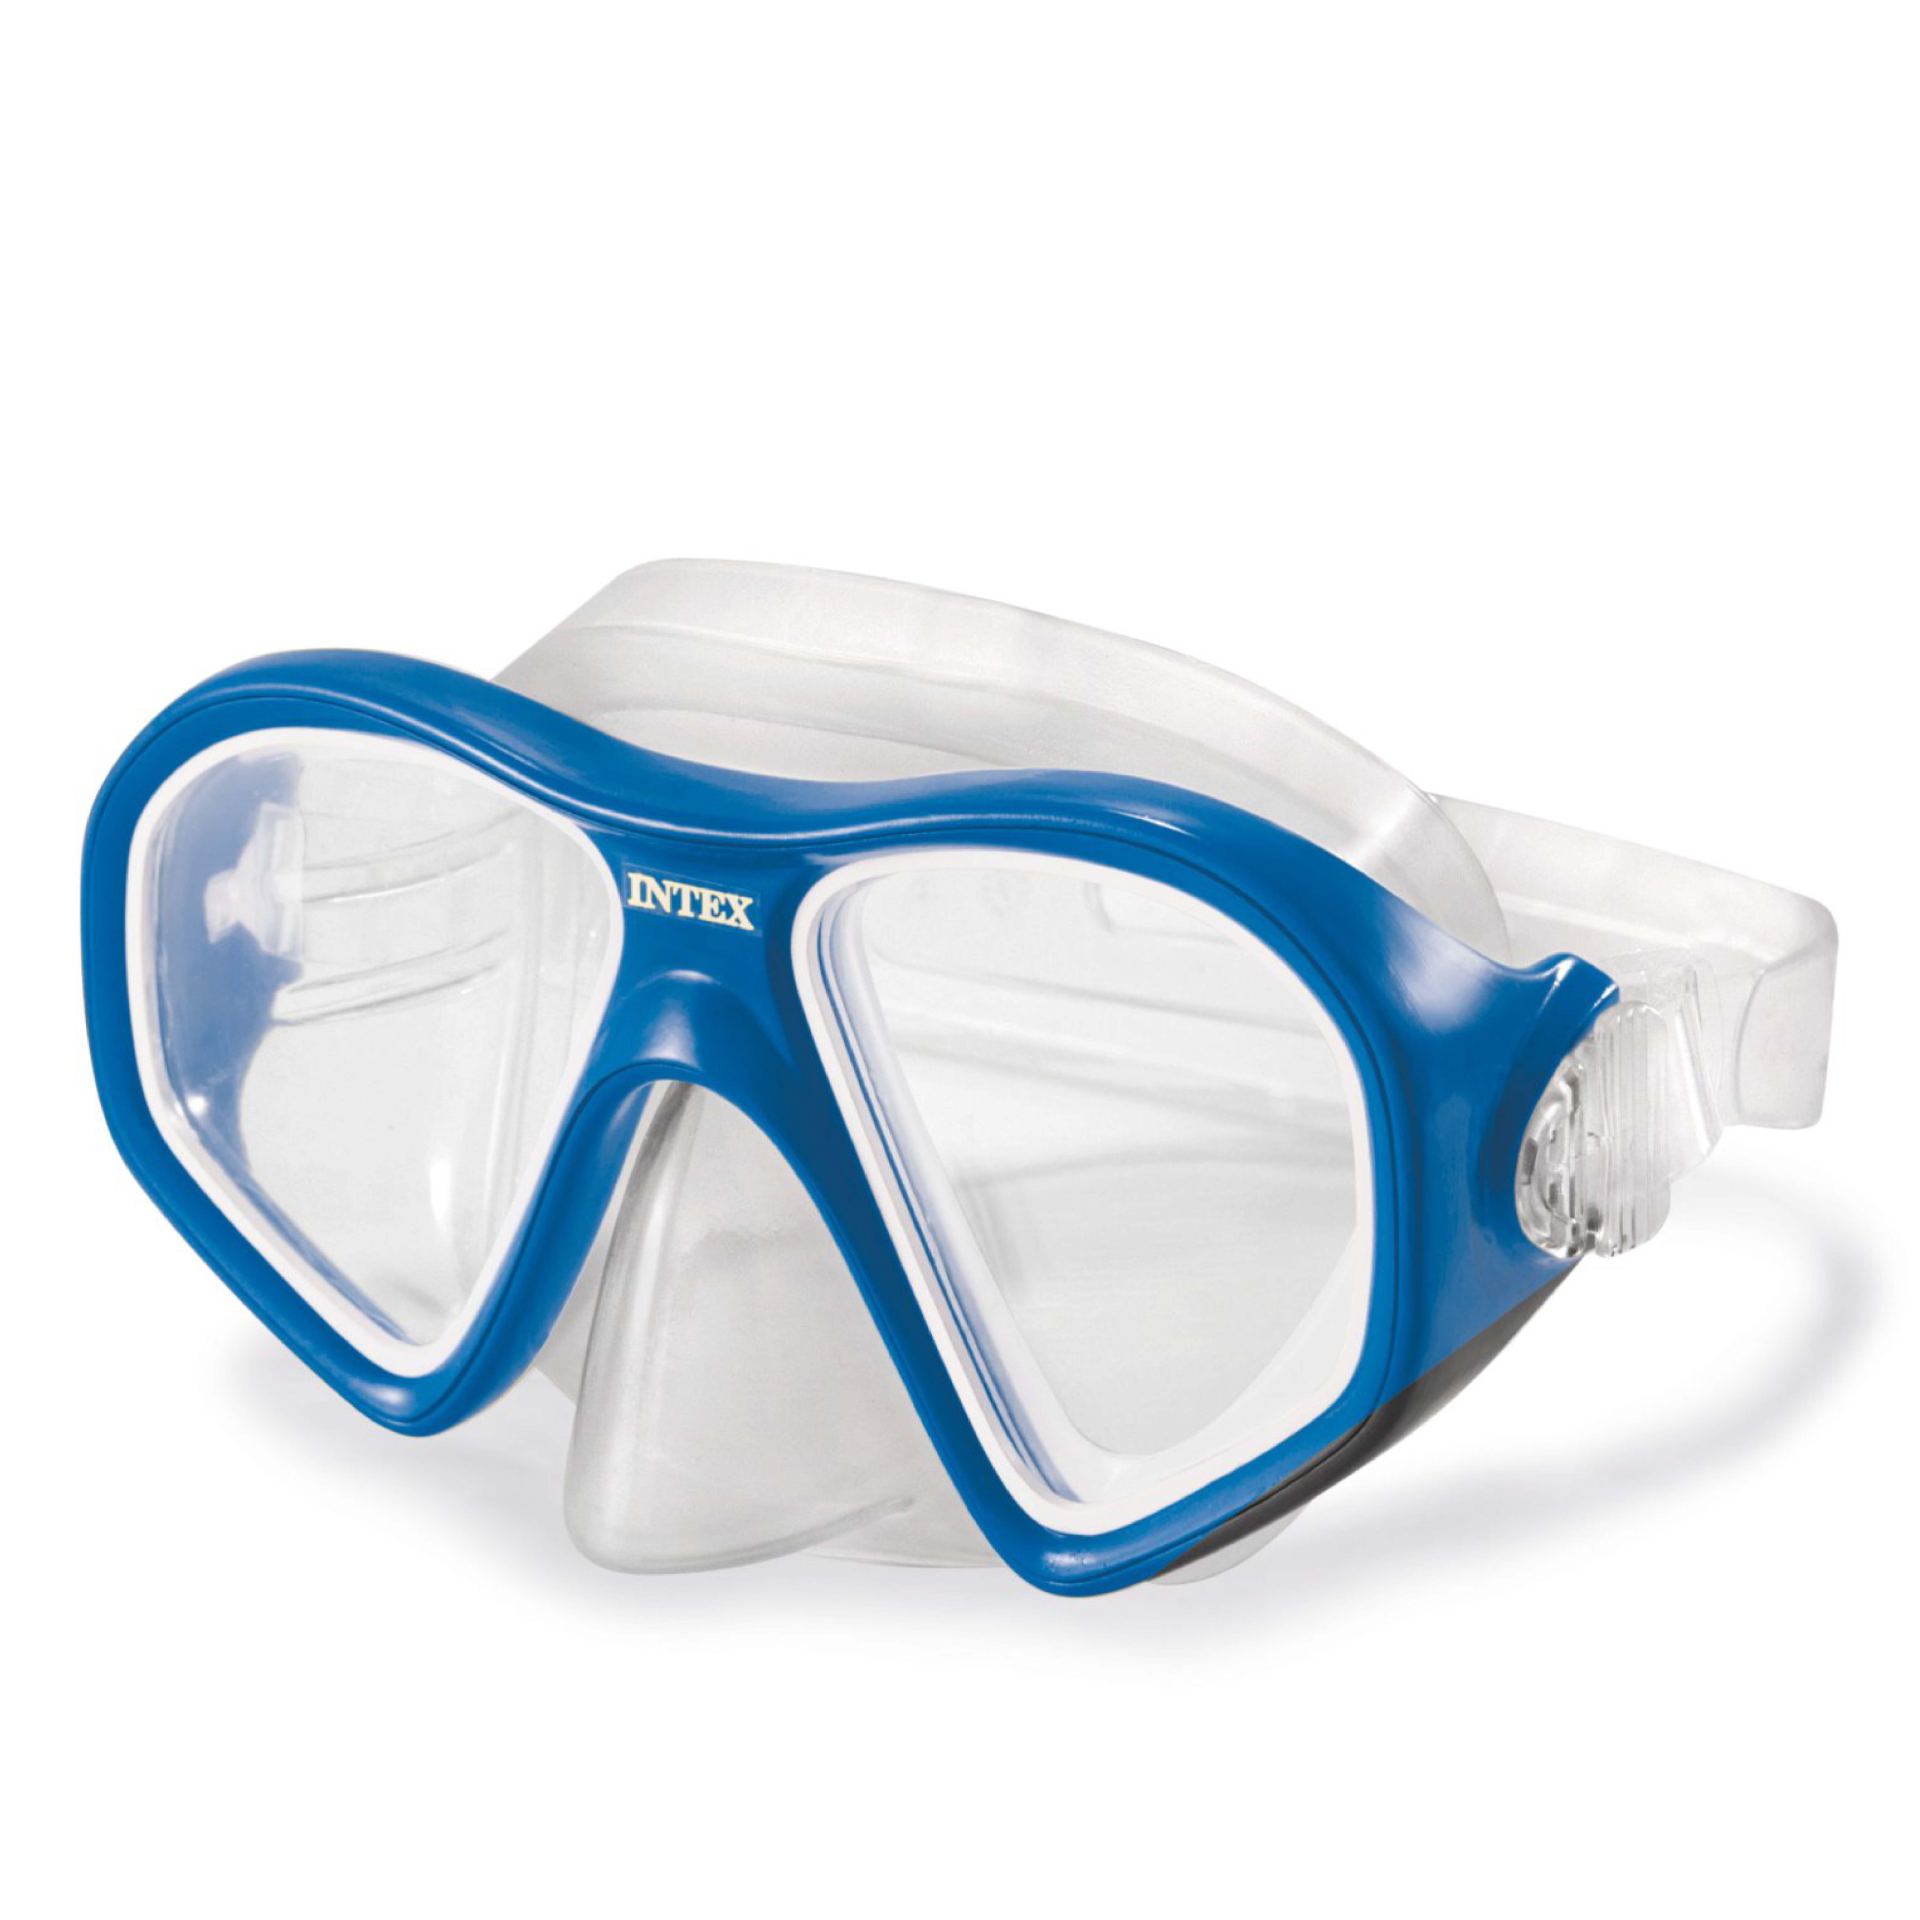 Intex reef rider masks - Blauw